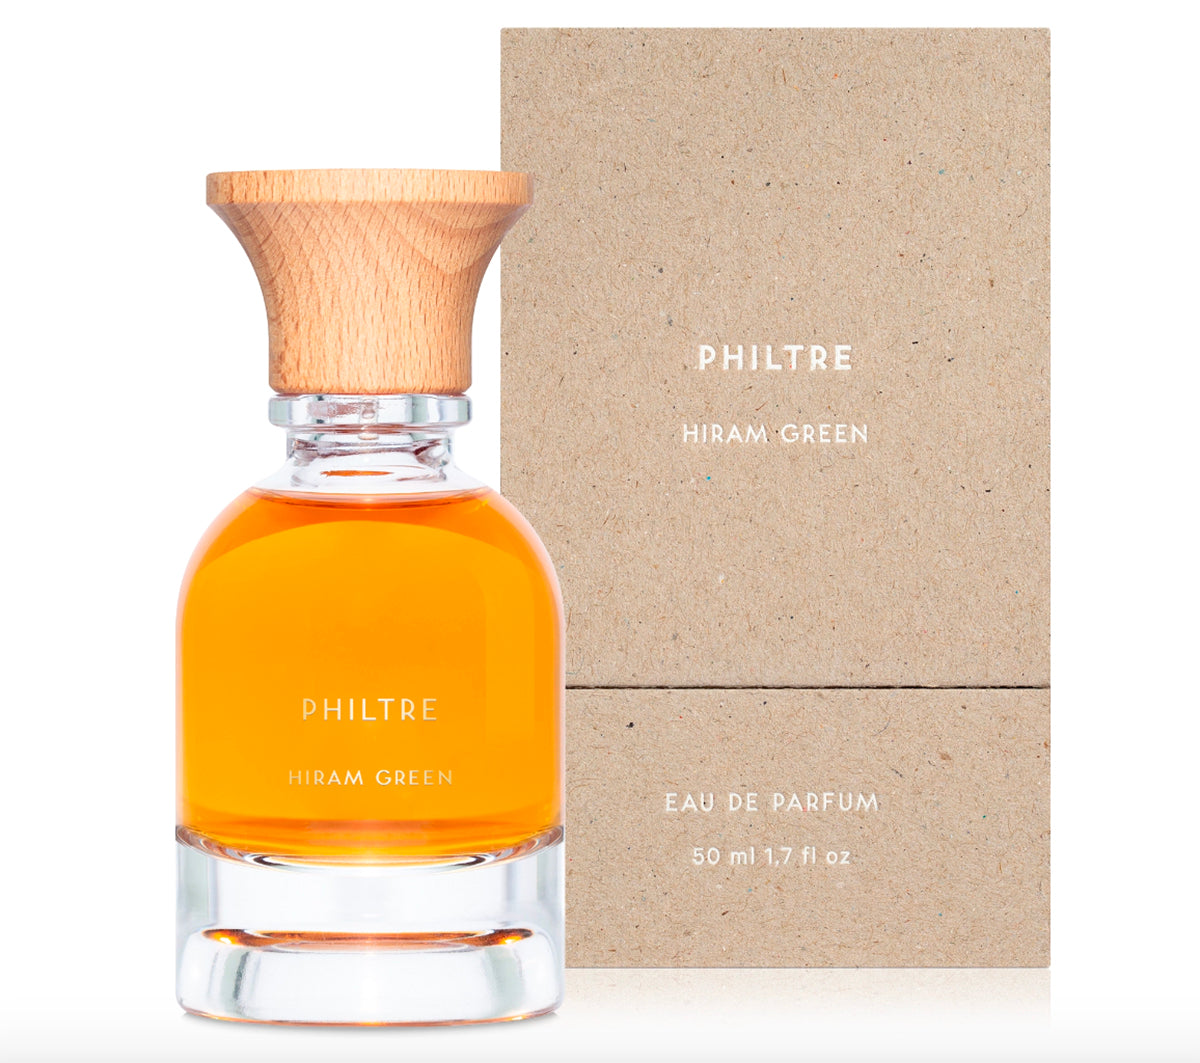 Philtre by Hiram Green at Indigo Perfumery